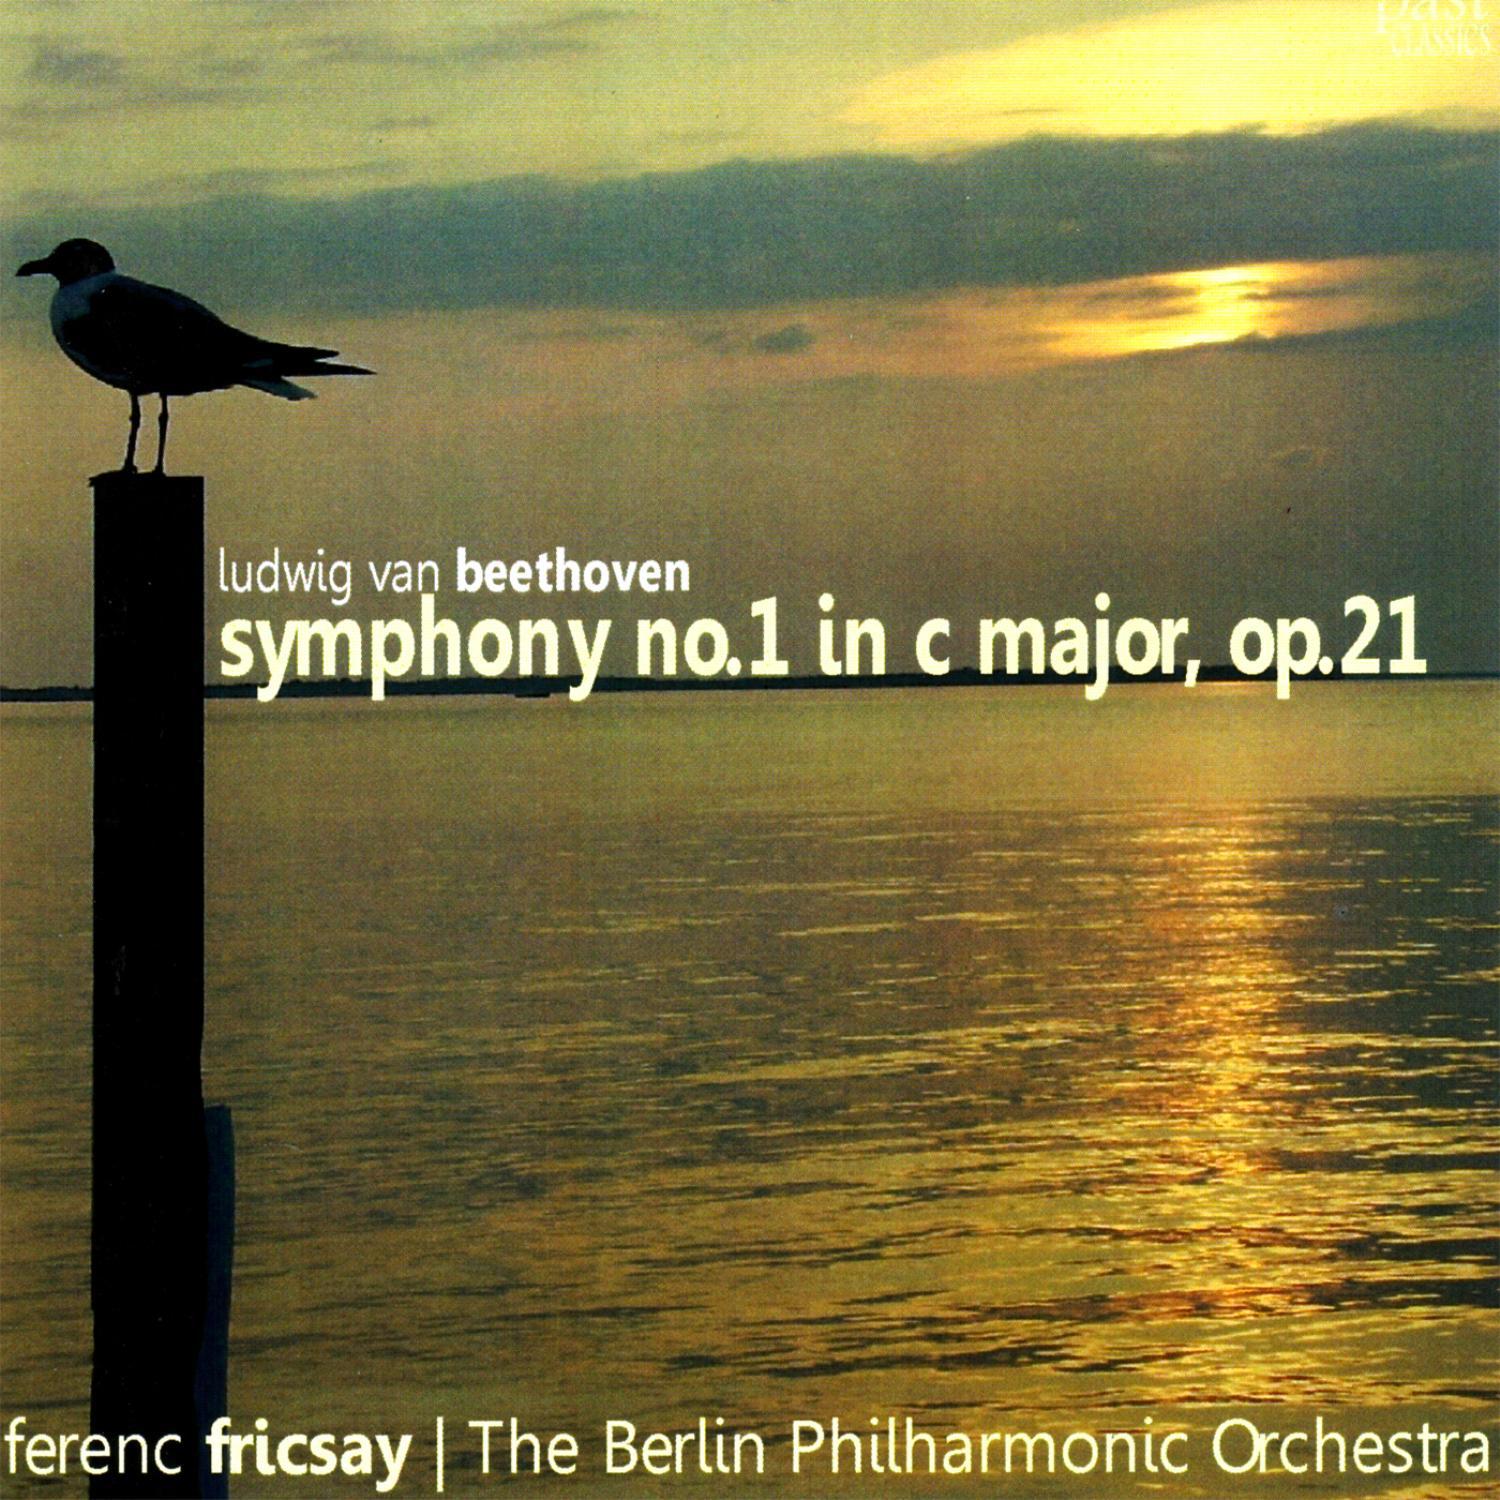 Beethoven: Symphony No. 1 in C Major, Op. 21